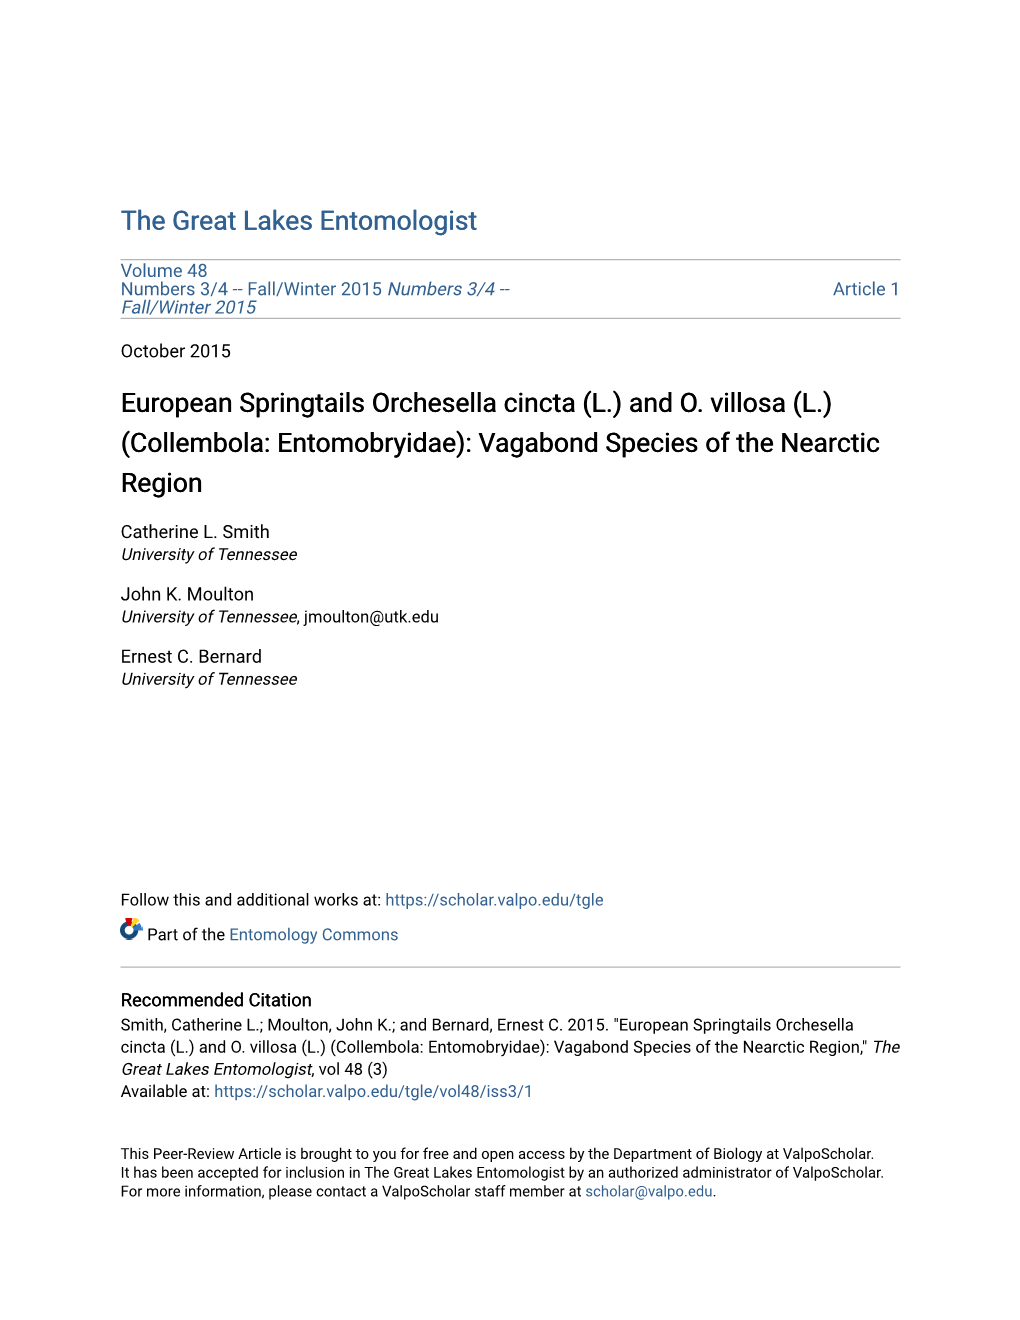 European Springtails Orchesella Cincta (L.) and O